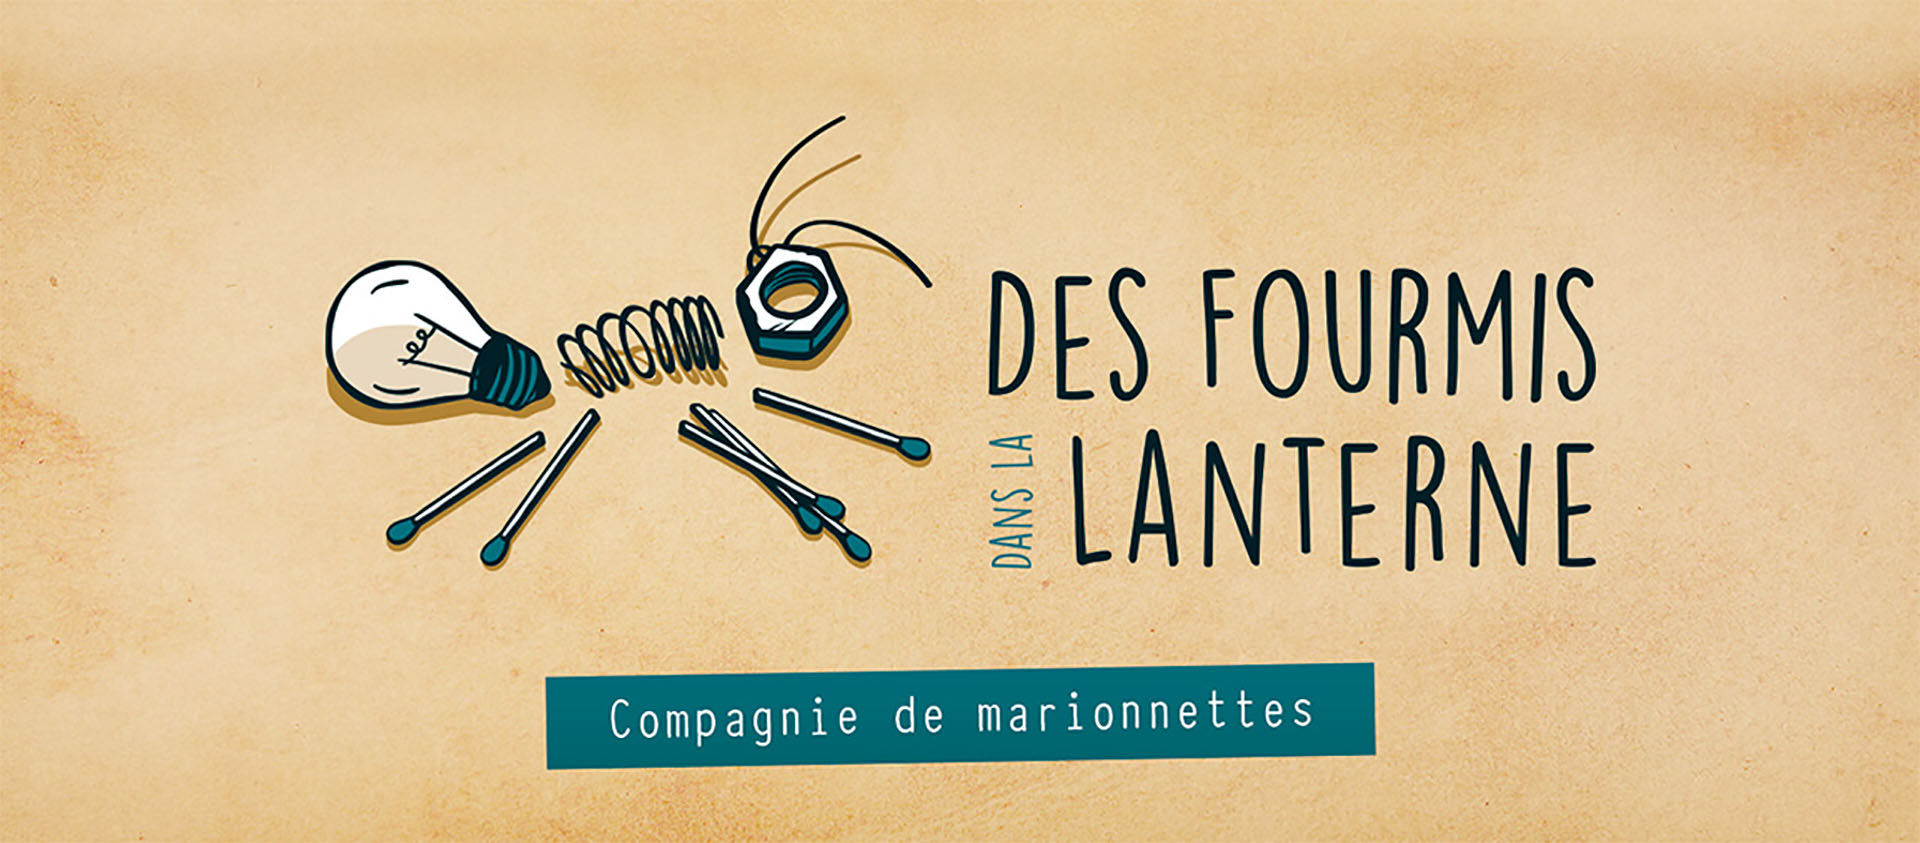 fourmis-dans-la-lanterne-img-home-logo